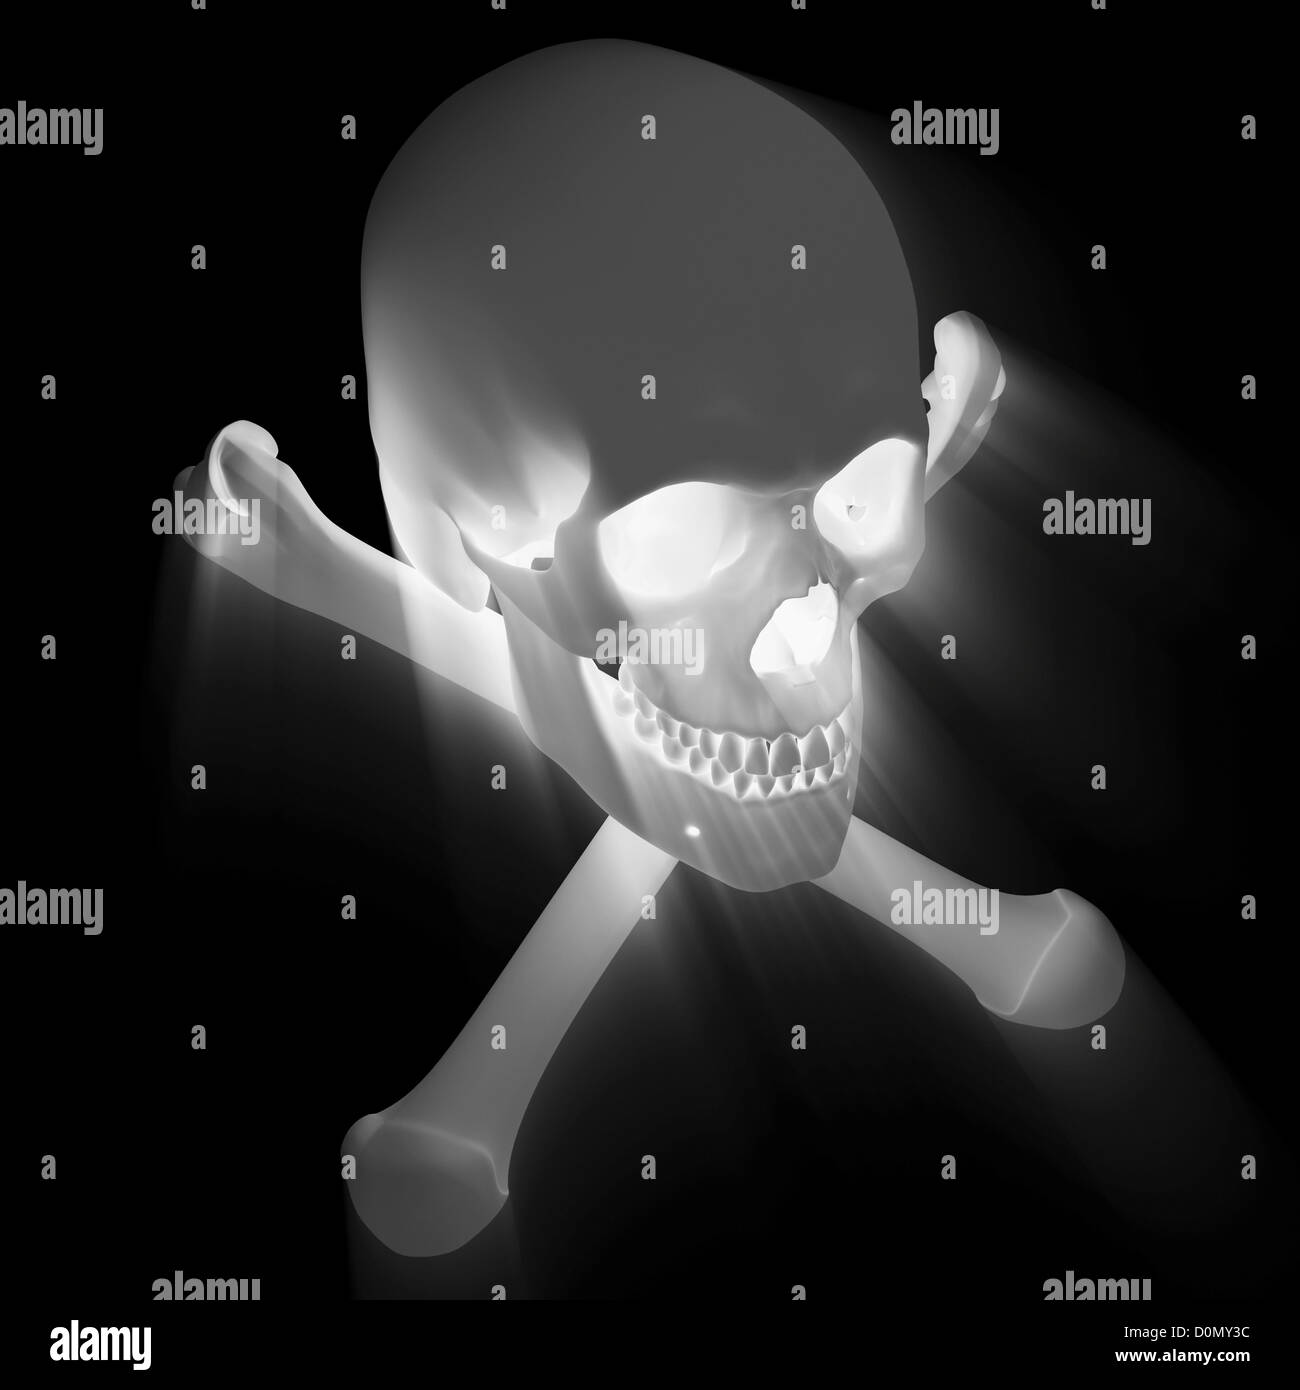 Illuminated skull and crossbones symbolizing danger or death. Stock Photo